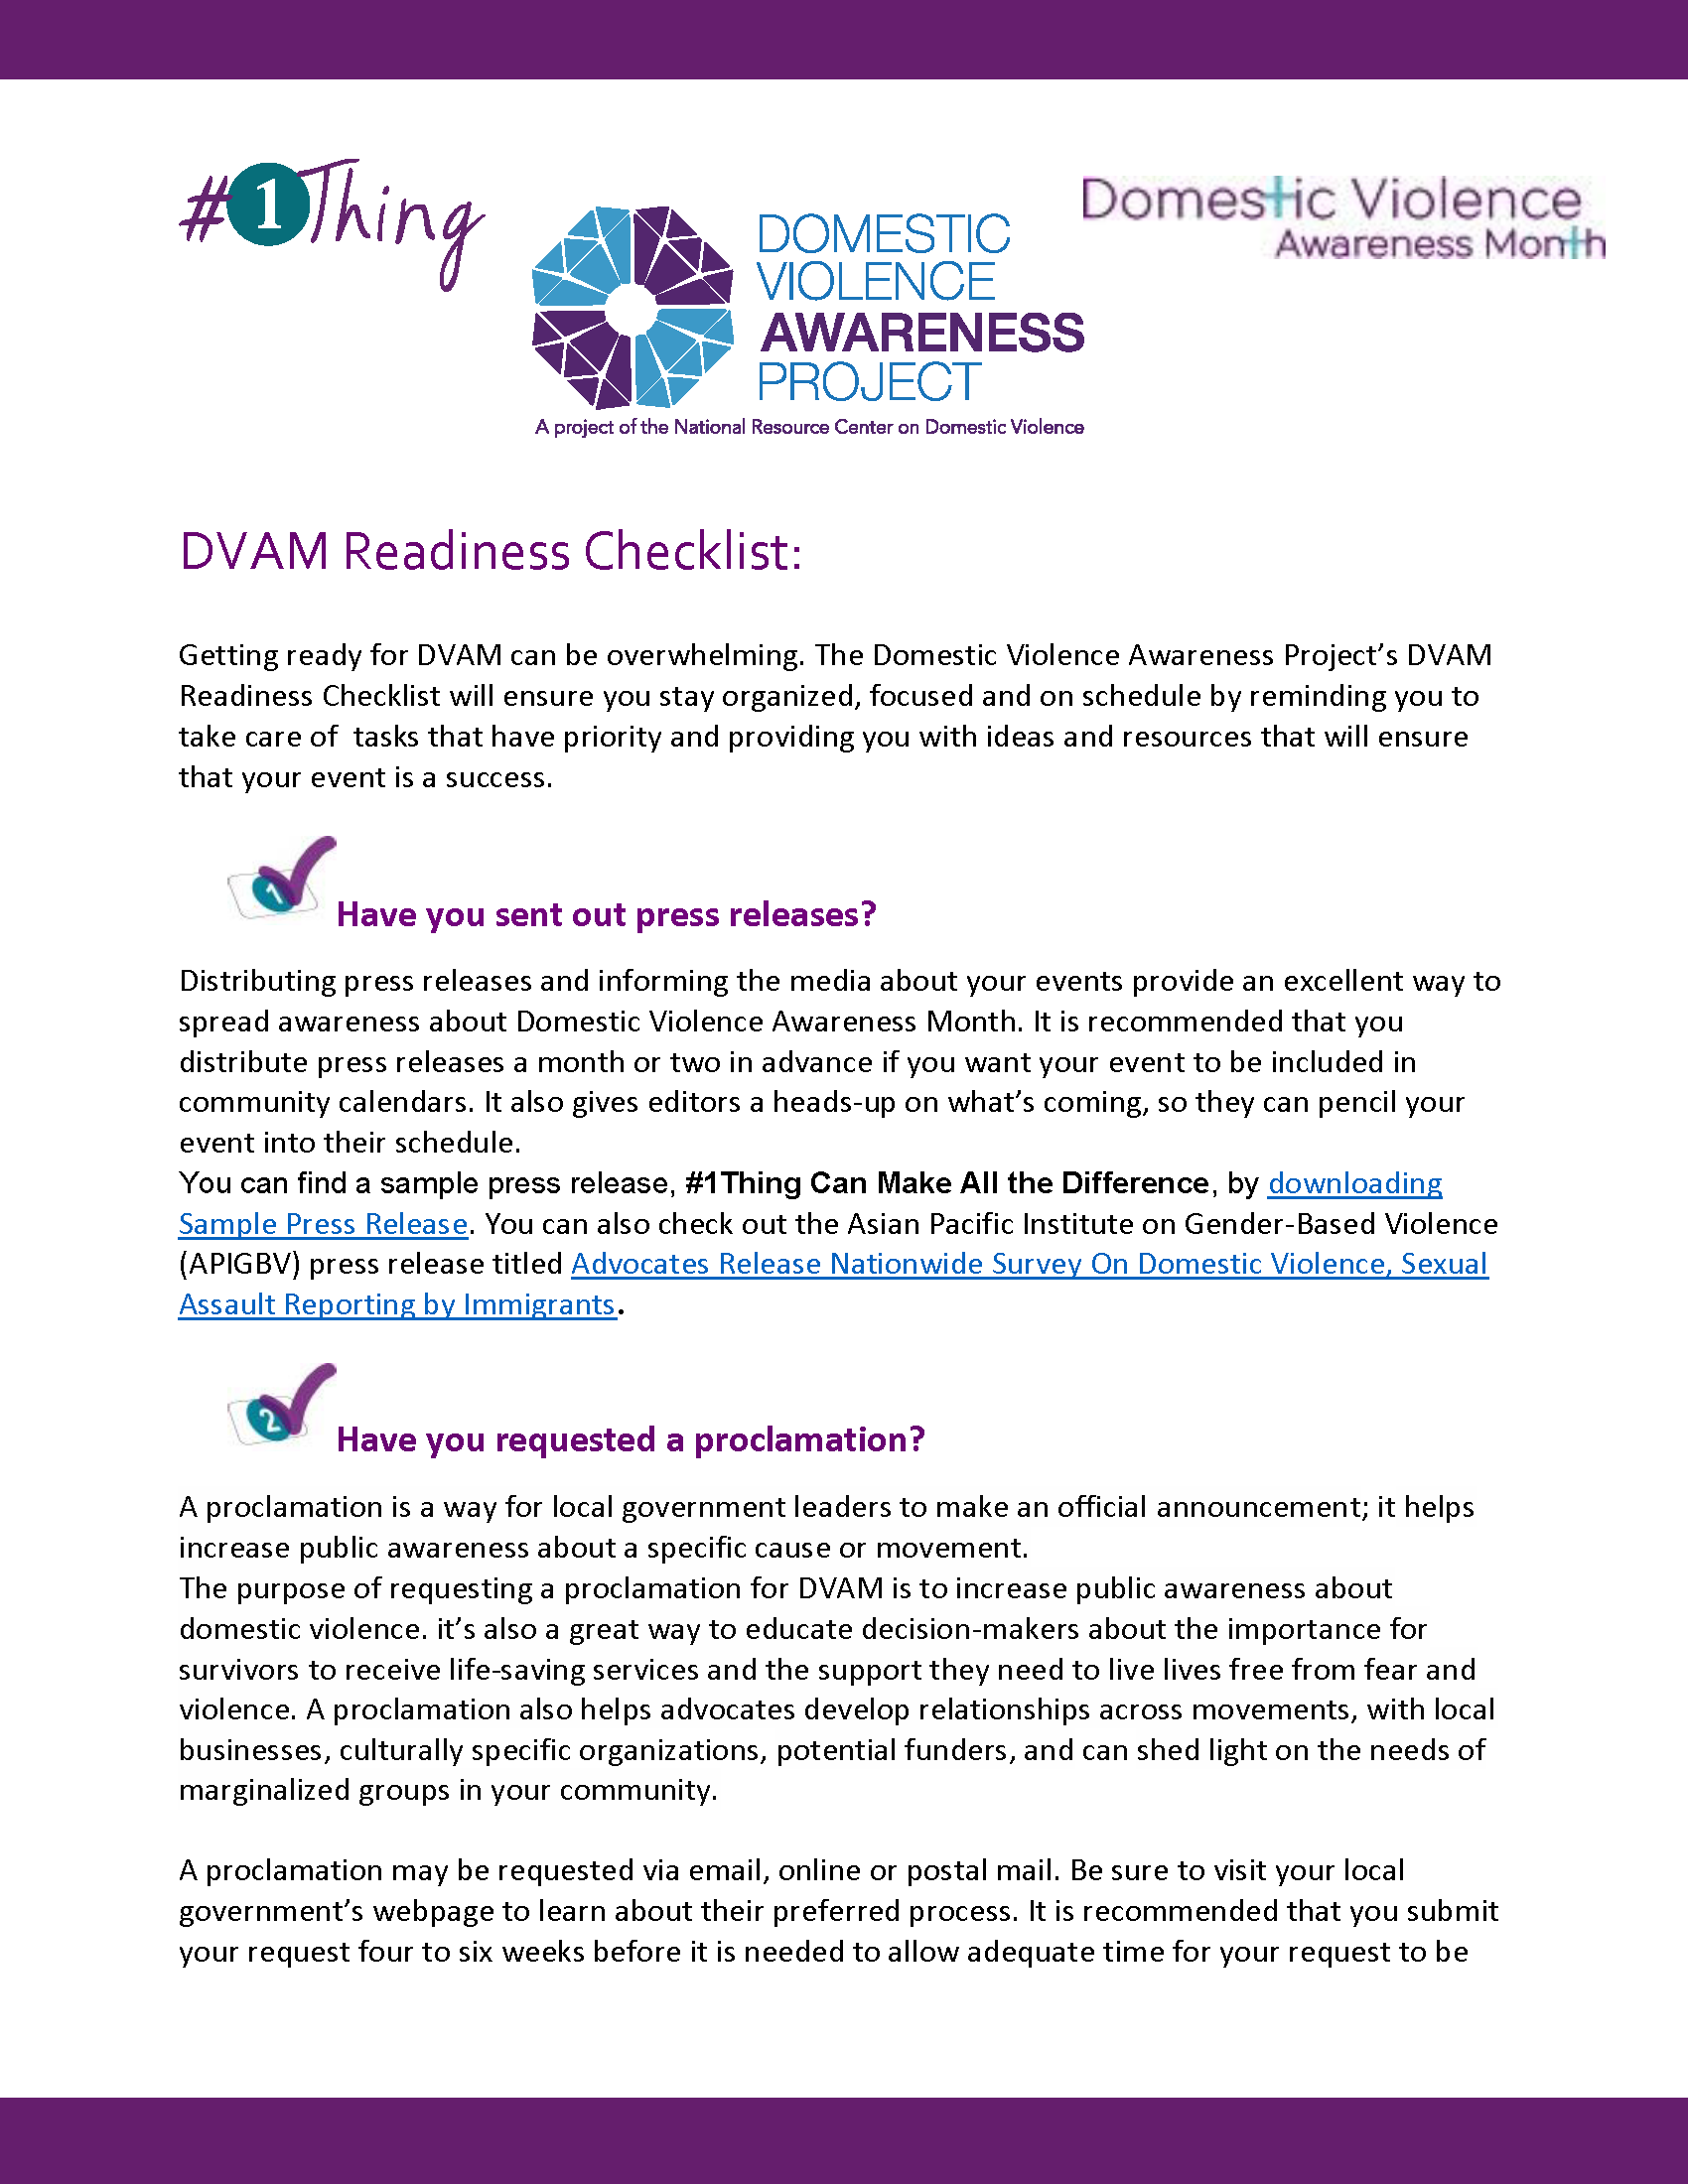 DVAM Readiness Checklist